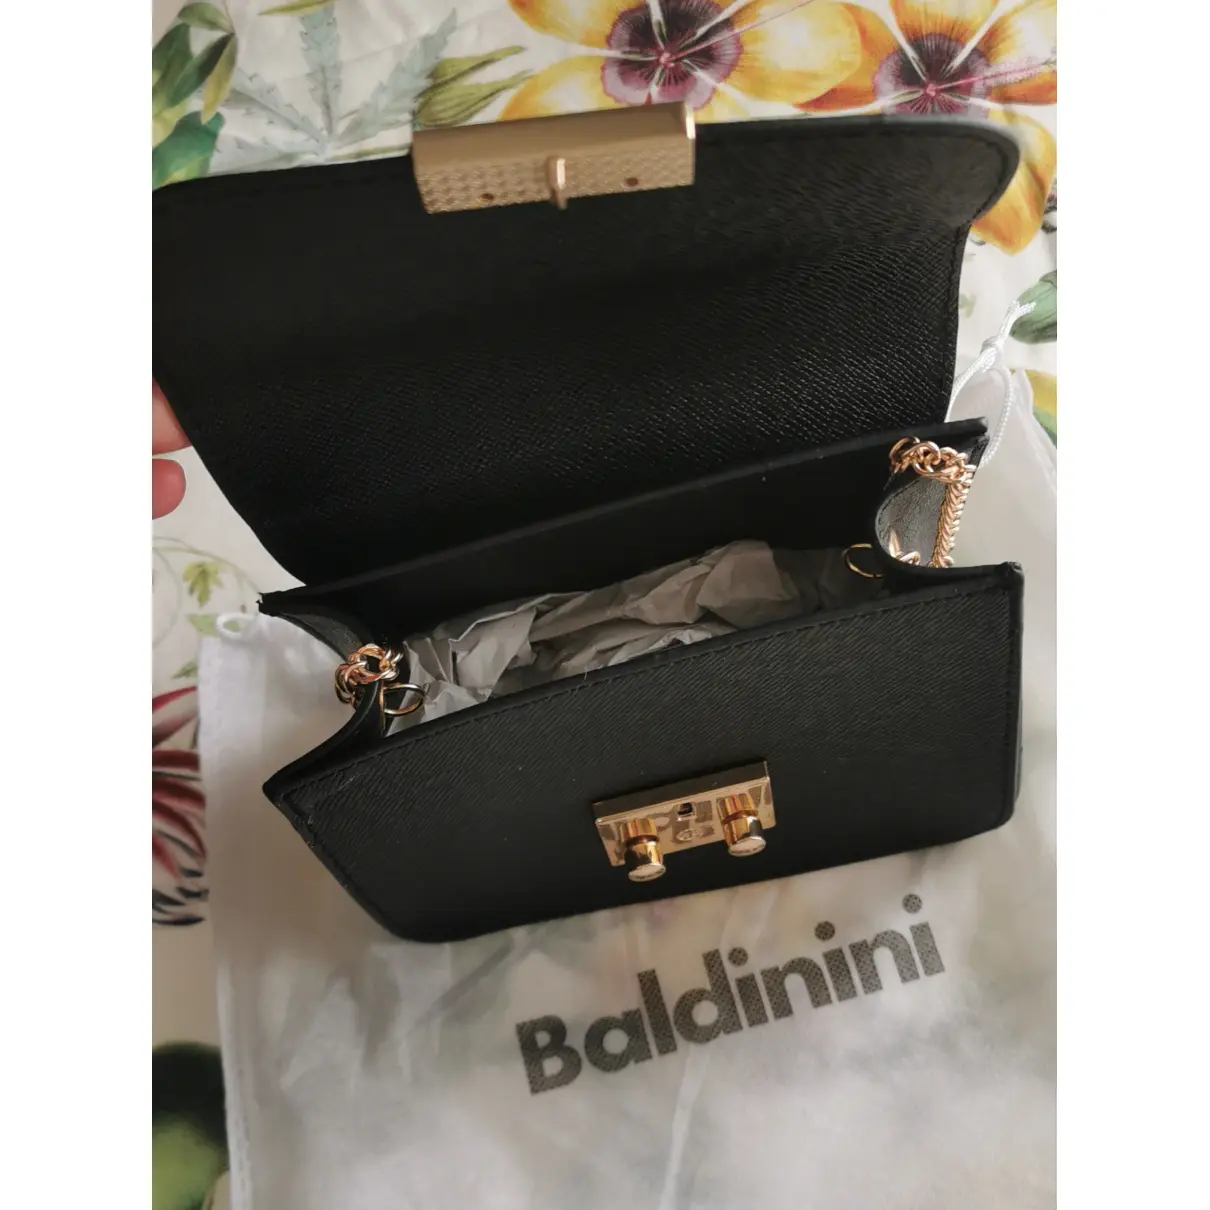 Buy Baldinini Vegan leather handbag online